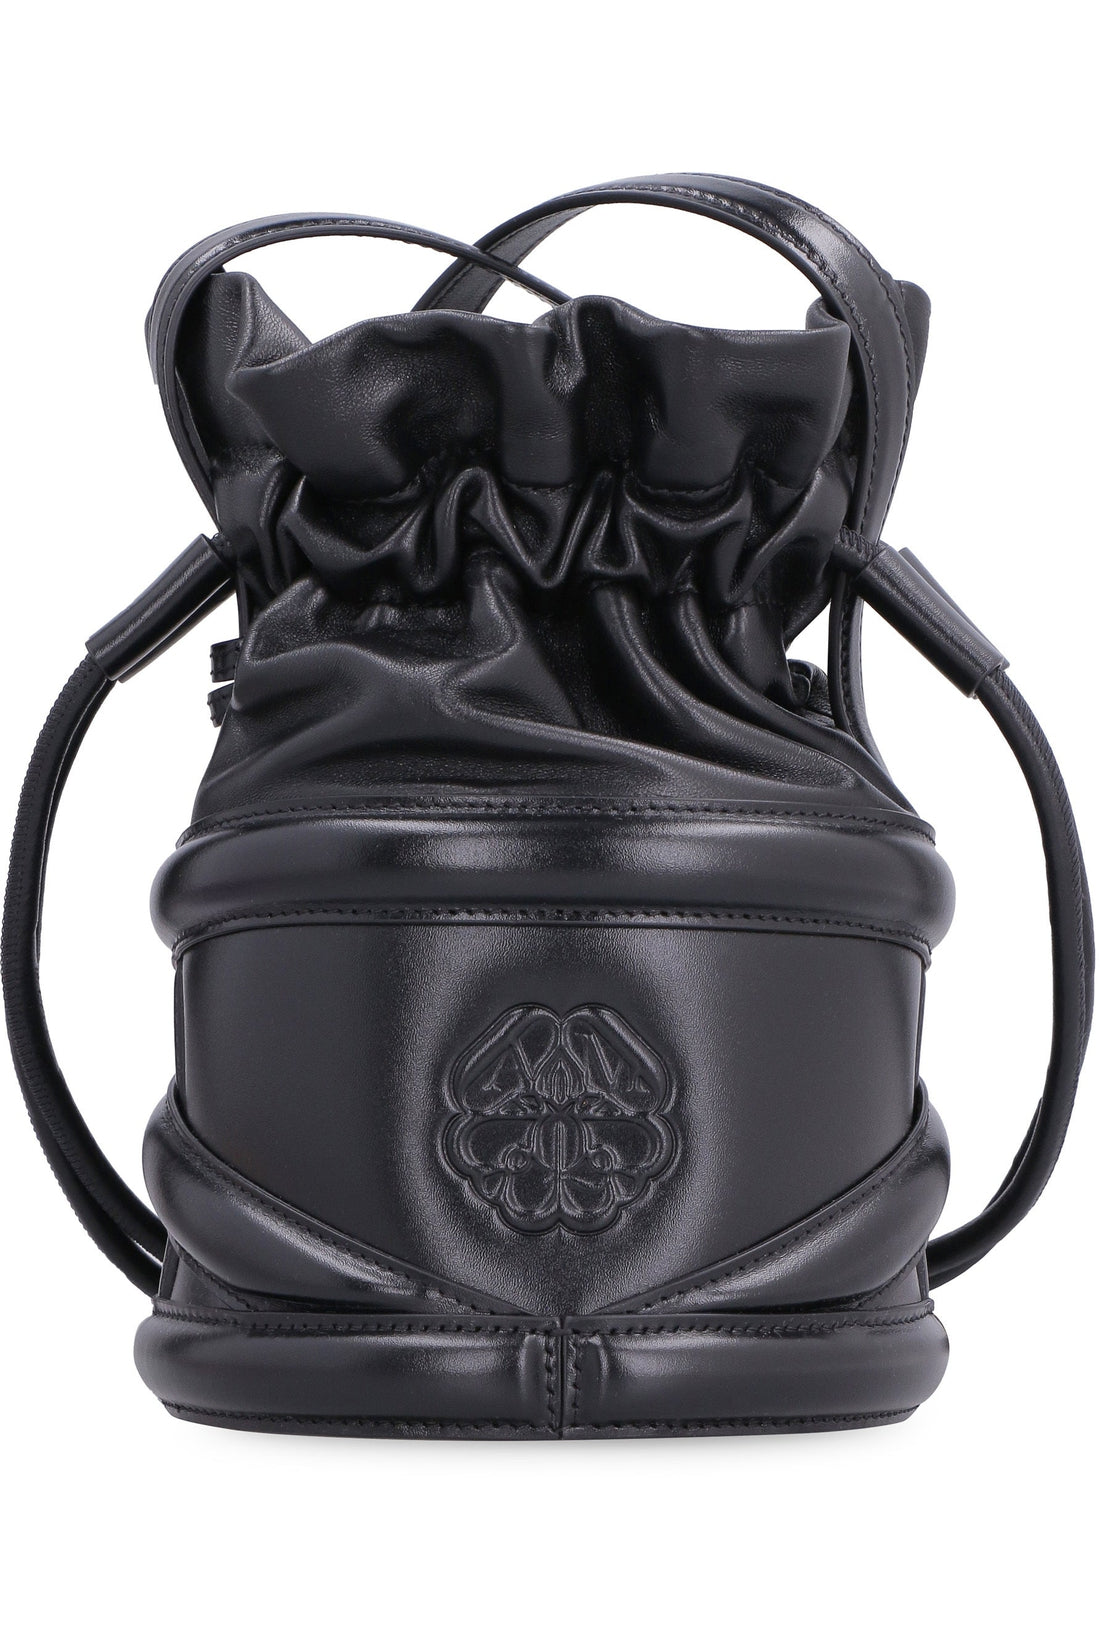 Alexander McQueen-OUTLET-SALE-The Soft Curve leather bucket bag-ARCHIVIST